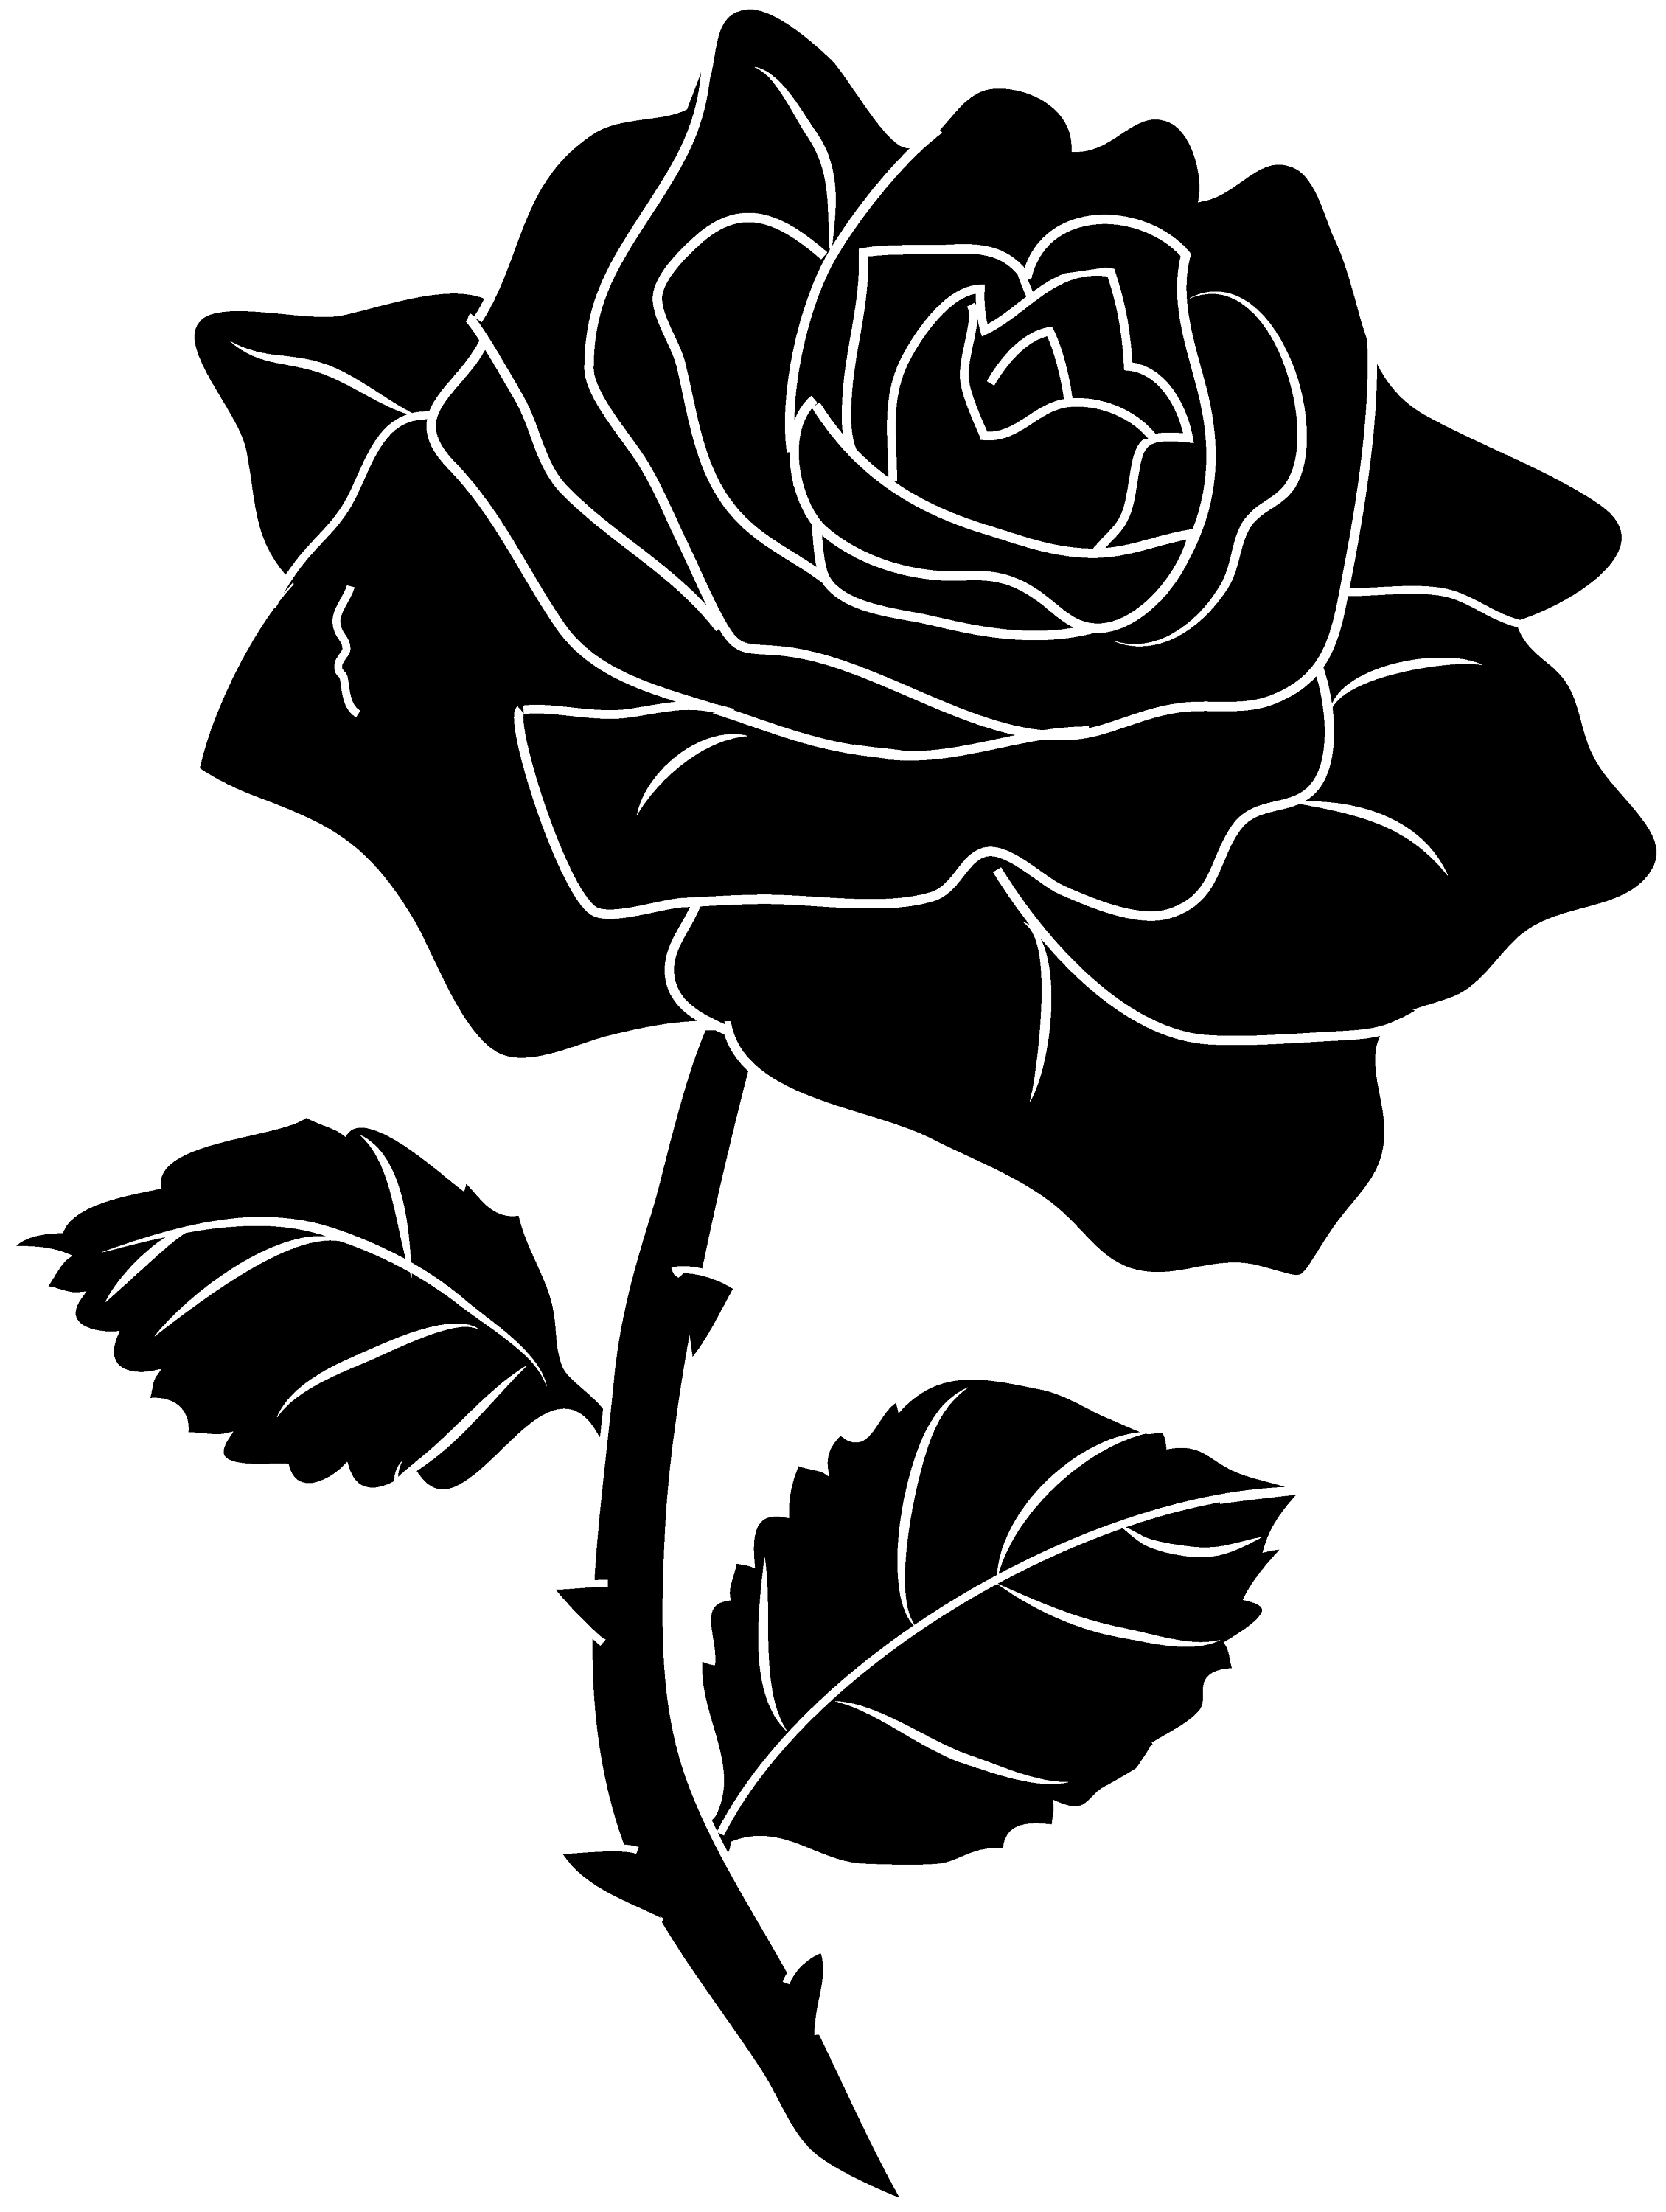 Black Rose Silhouette Clip Art - Free Clip Art - Black Rose Graphic